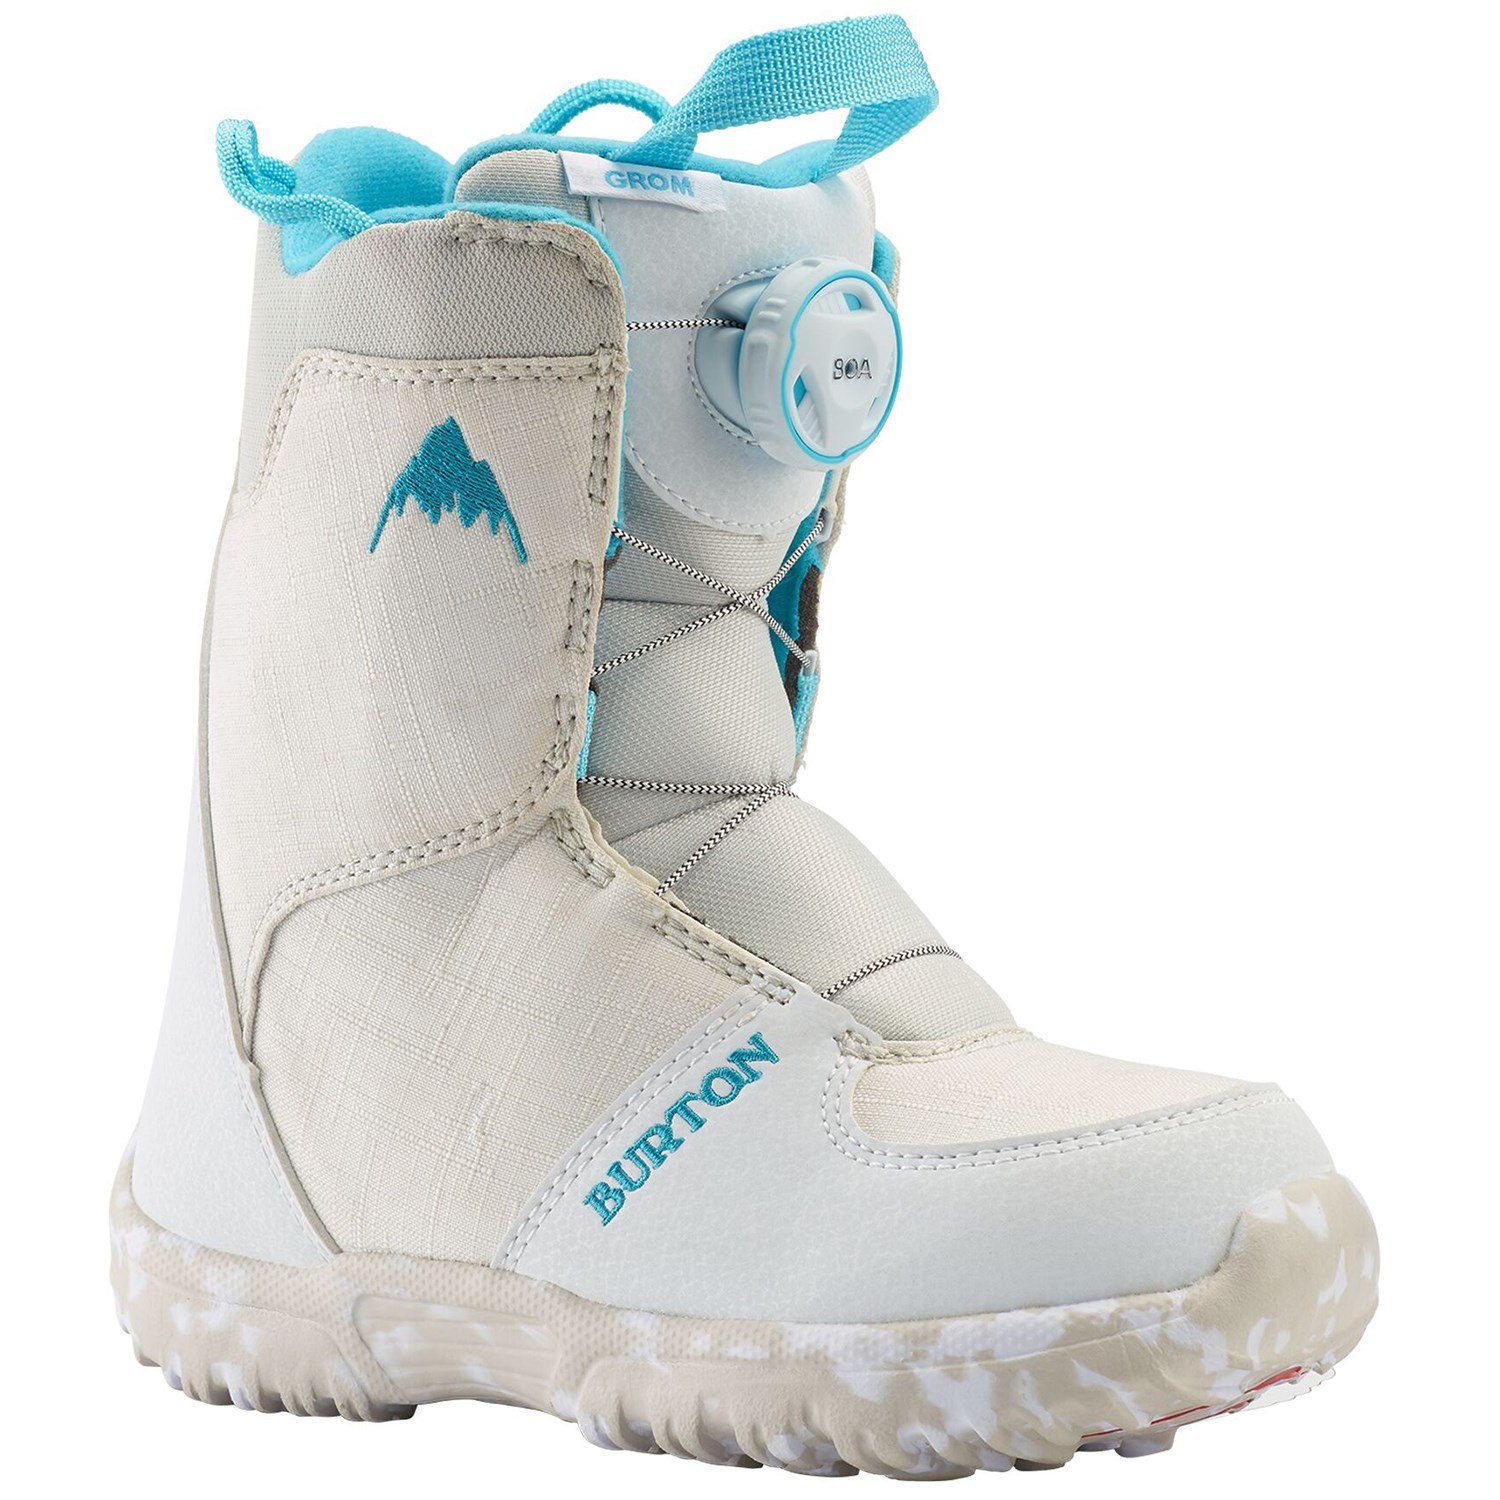 Ботинки для сноубординга Burton Grom Boa, белый